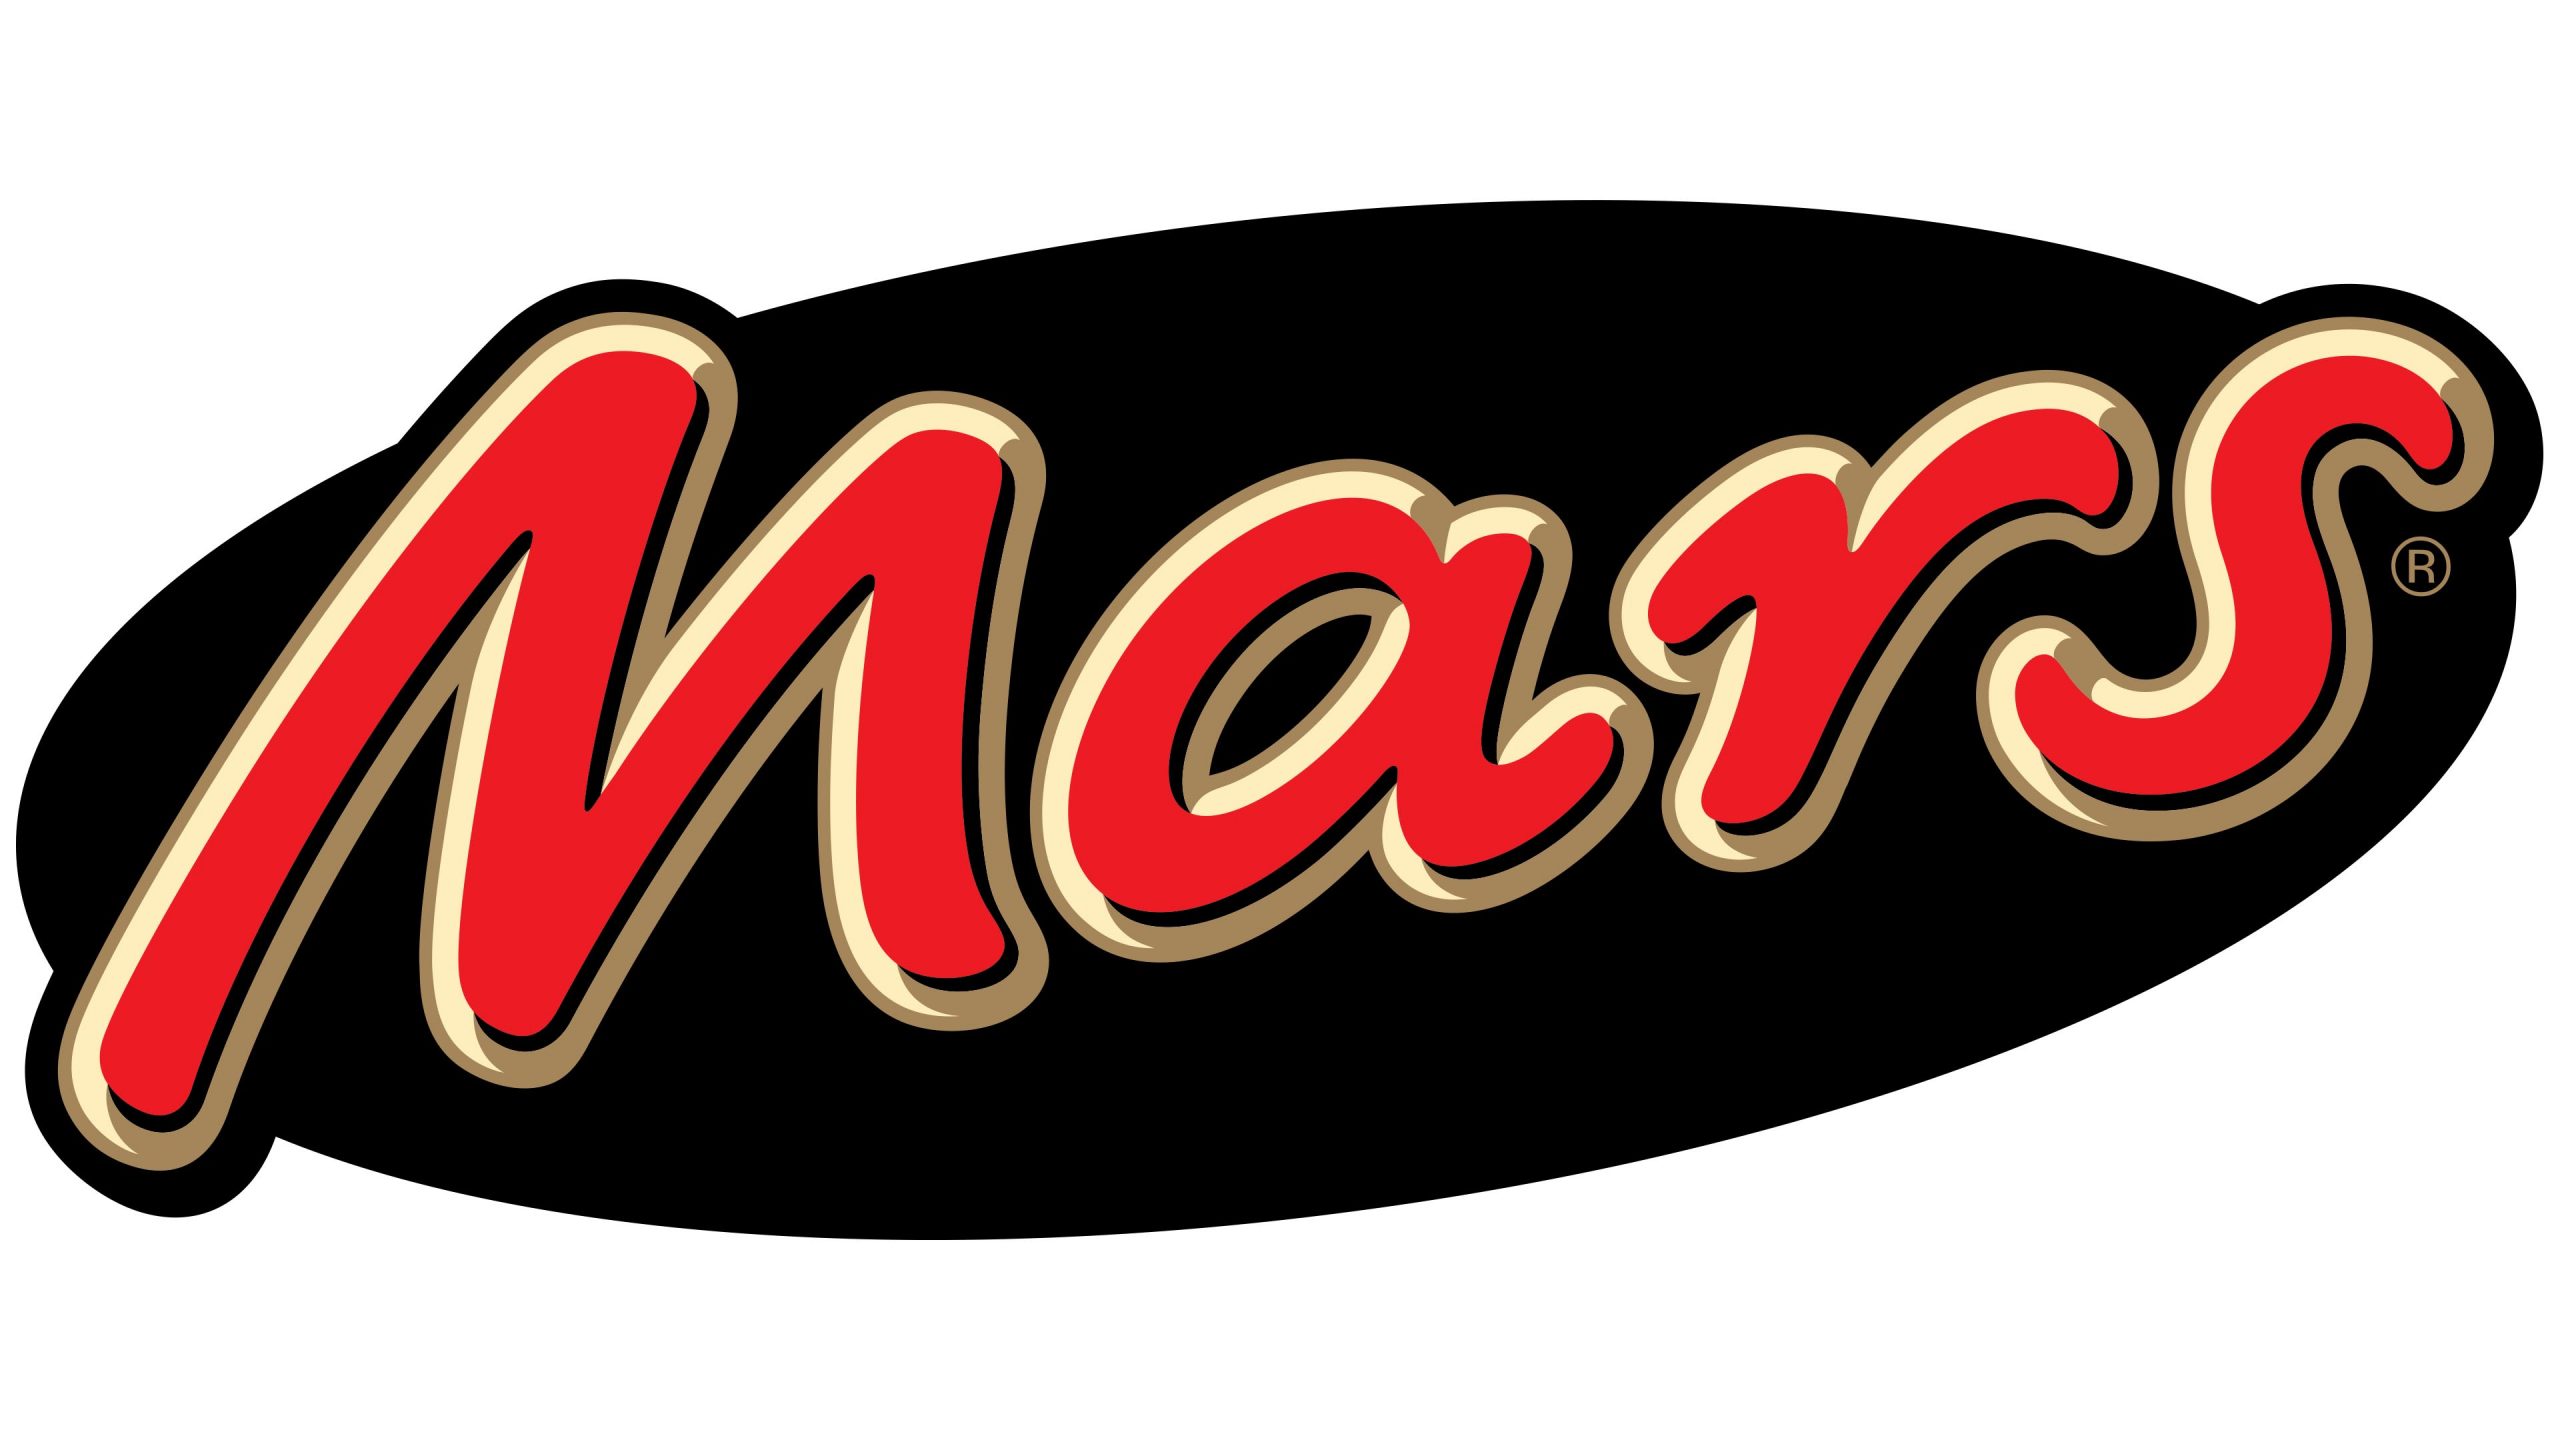 Mars logotype